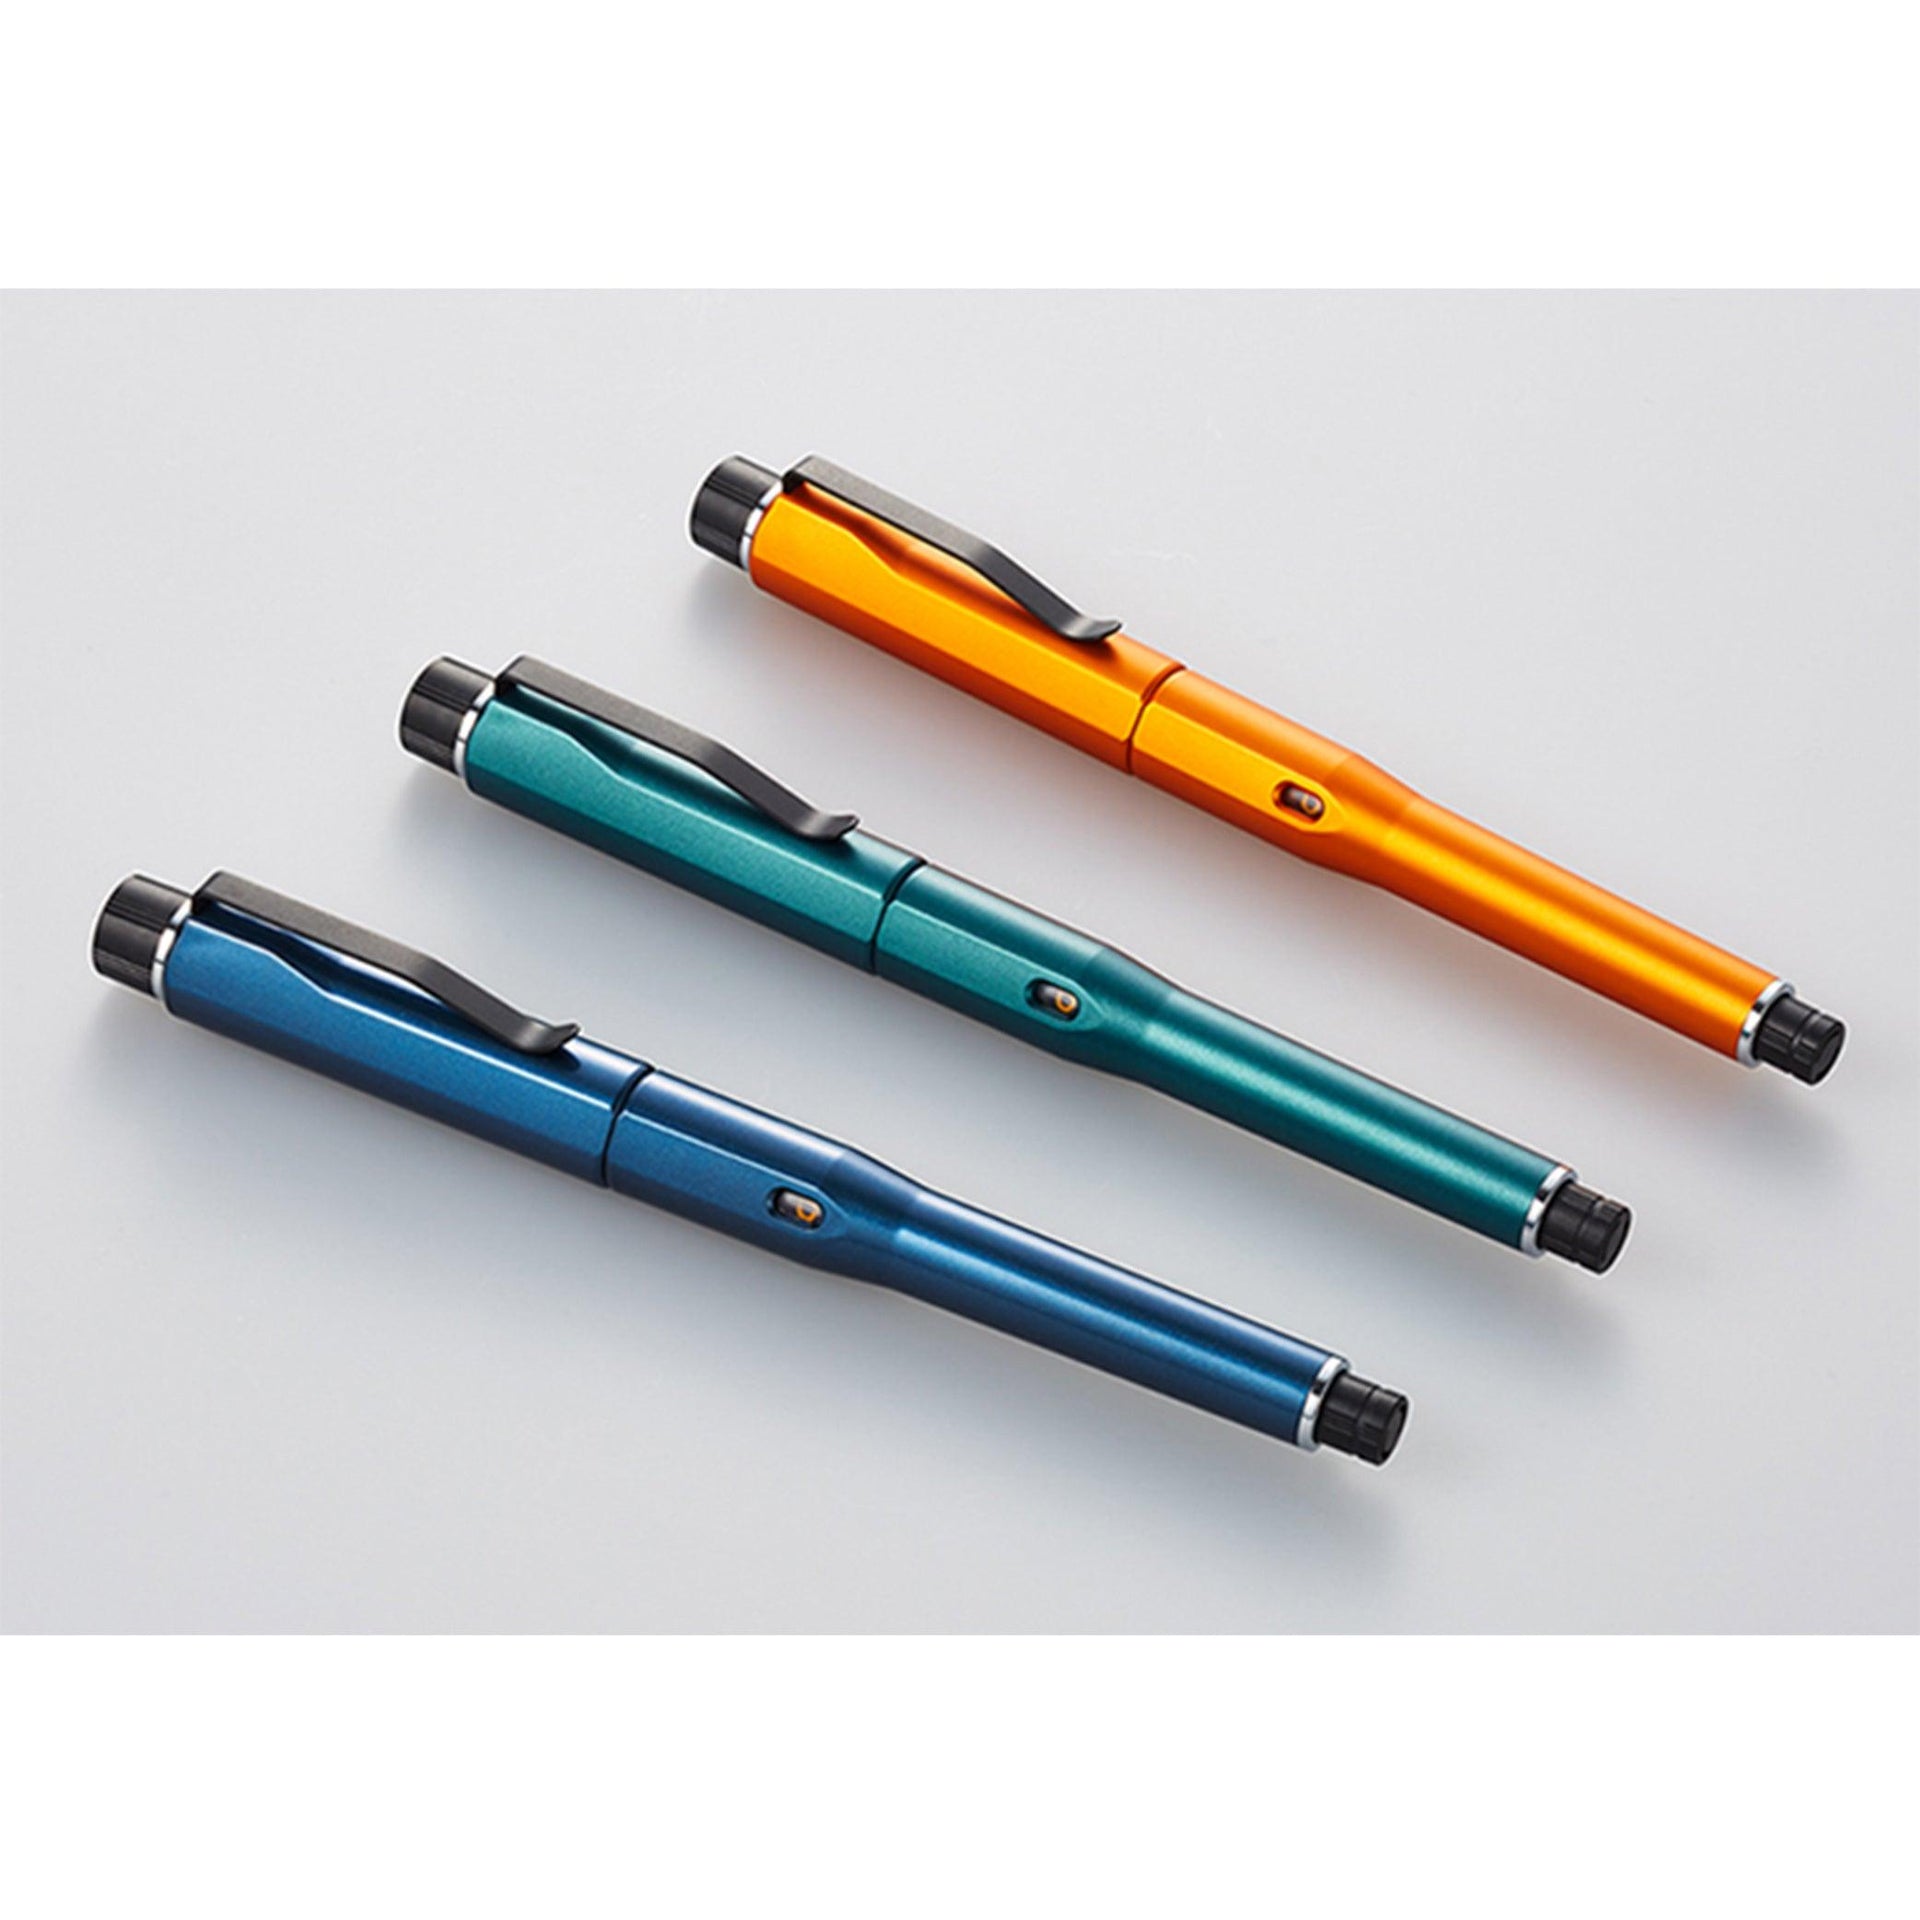 Kuru Toga ADVANCED Navy Blue Mechanical Pencil – CHL-STORE